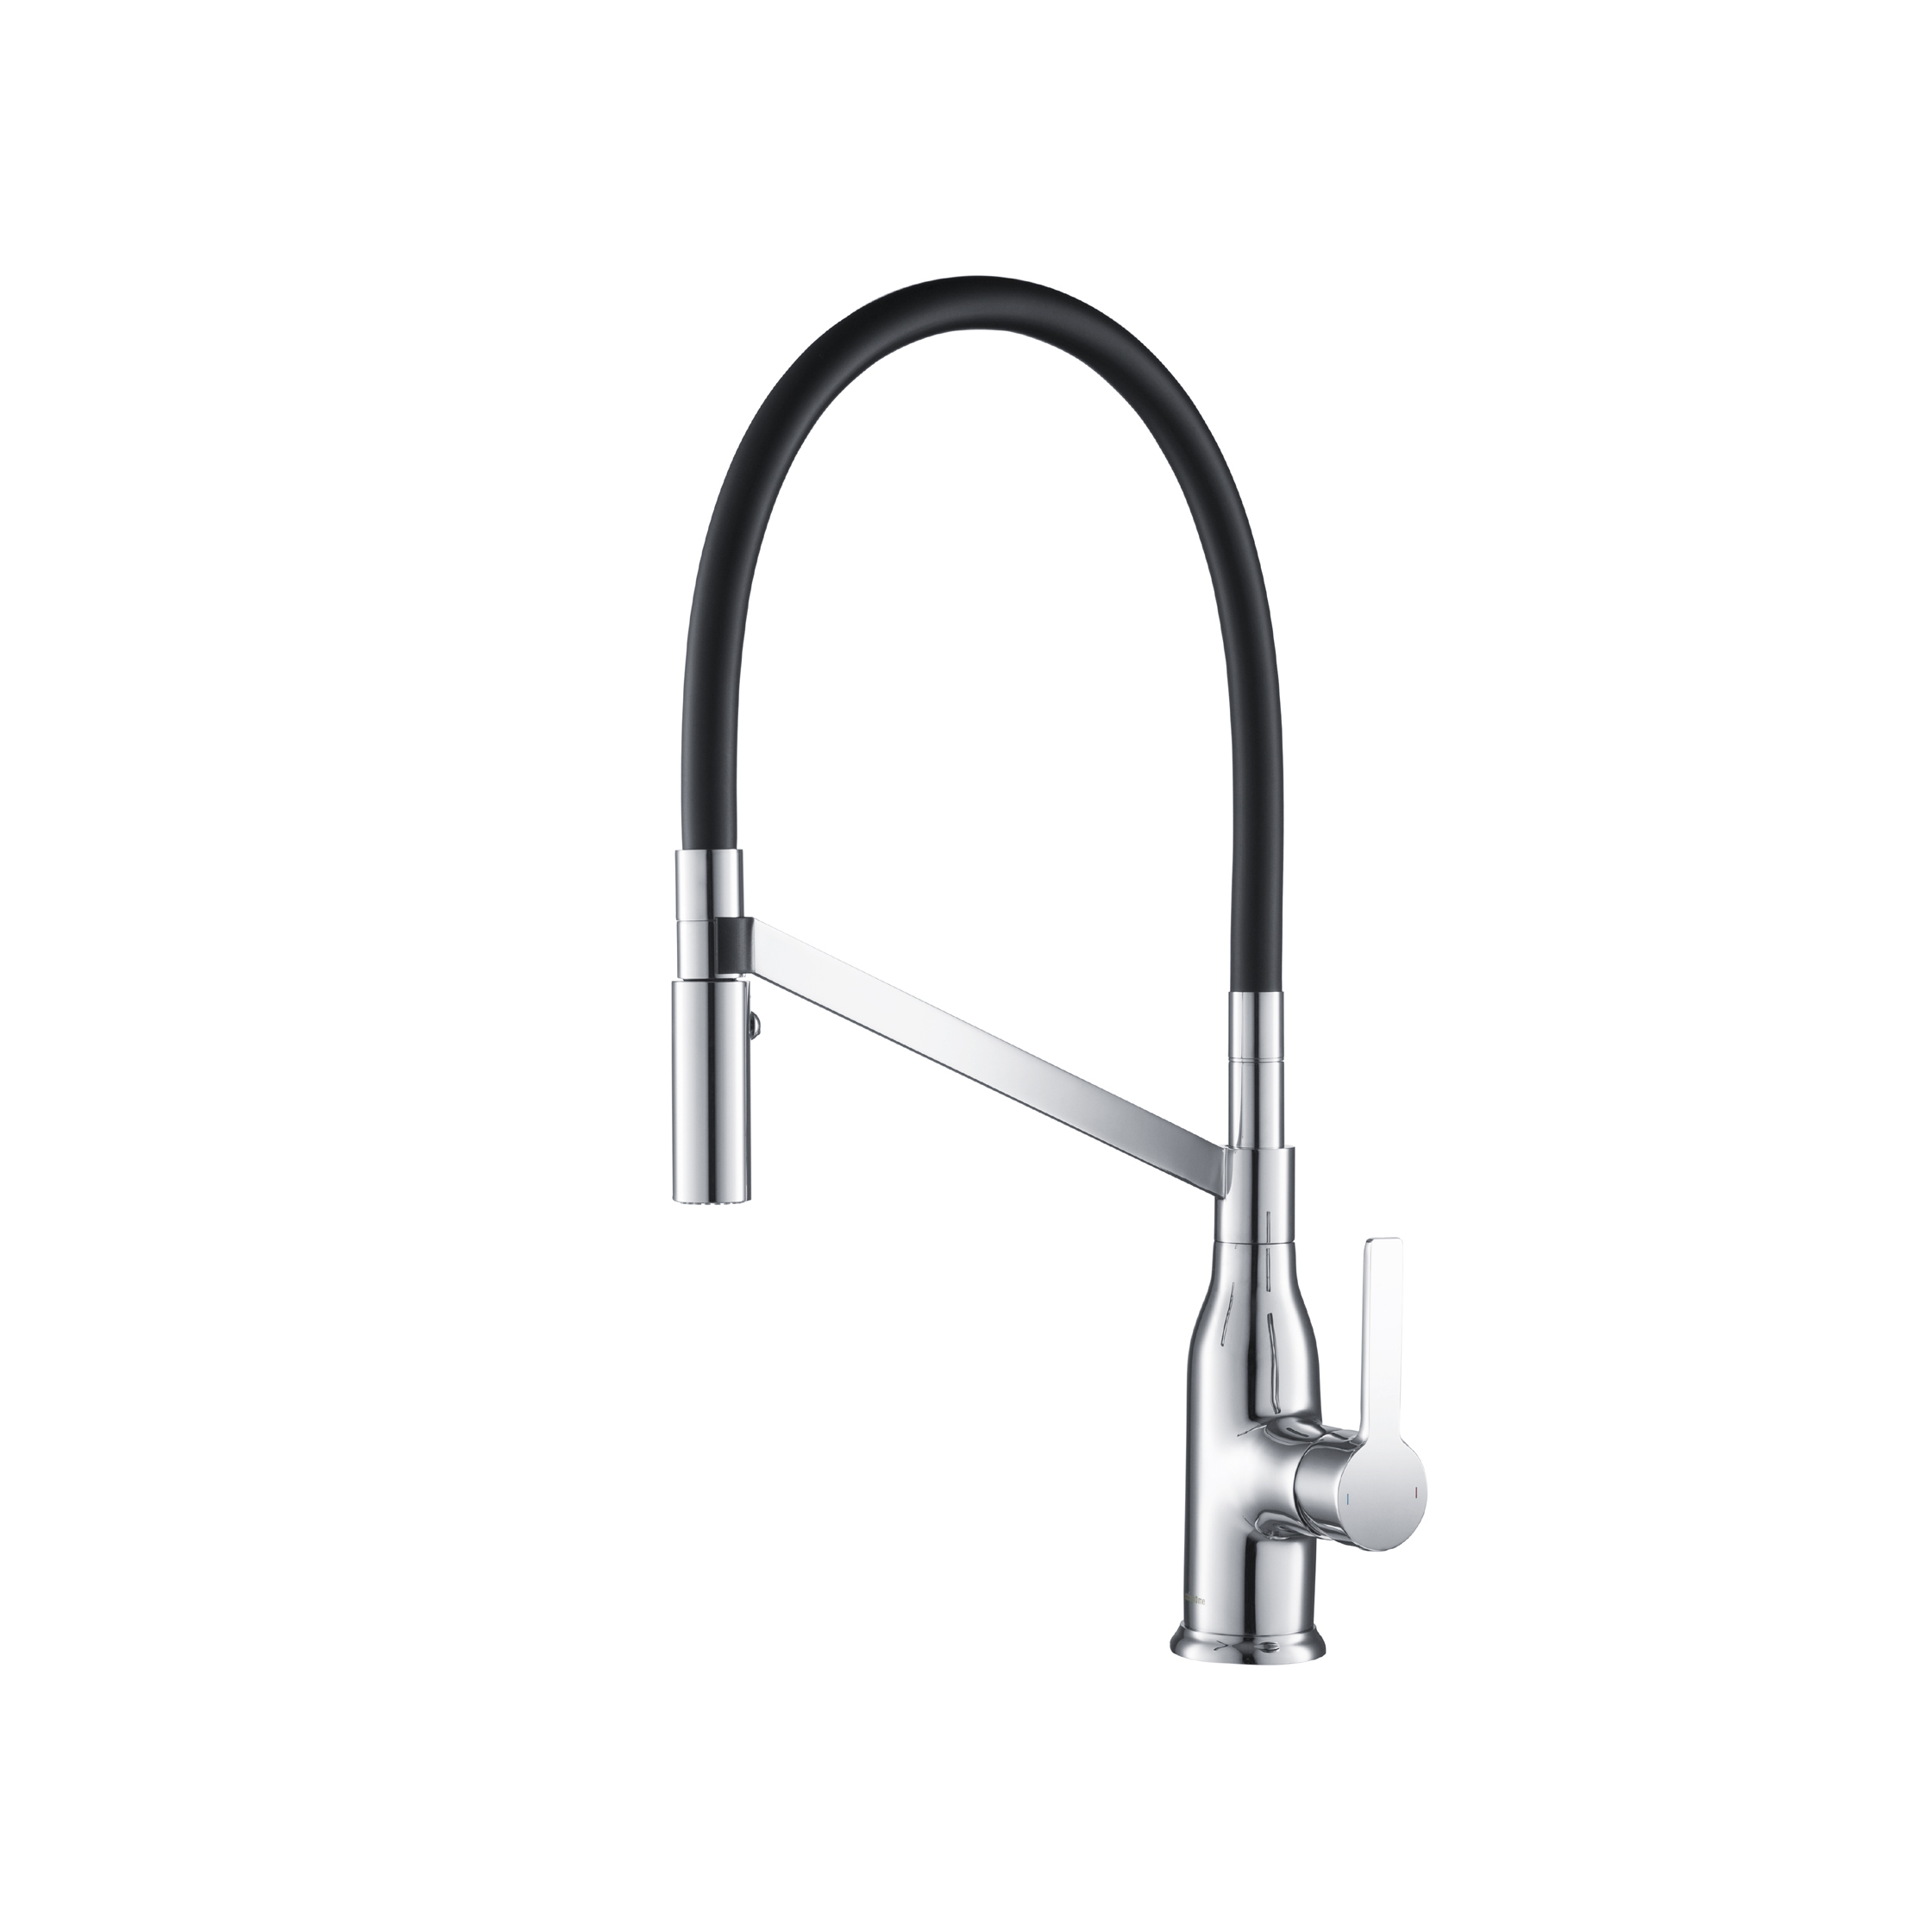 Vallant Kitchen Faucet W/ Spray Head Gooseneck Single Lever Mixer - Chrome